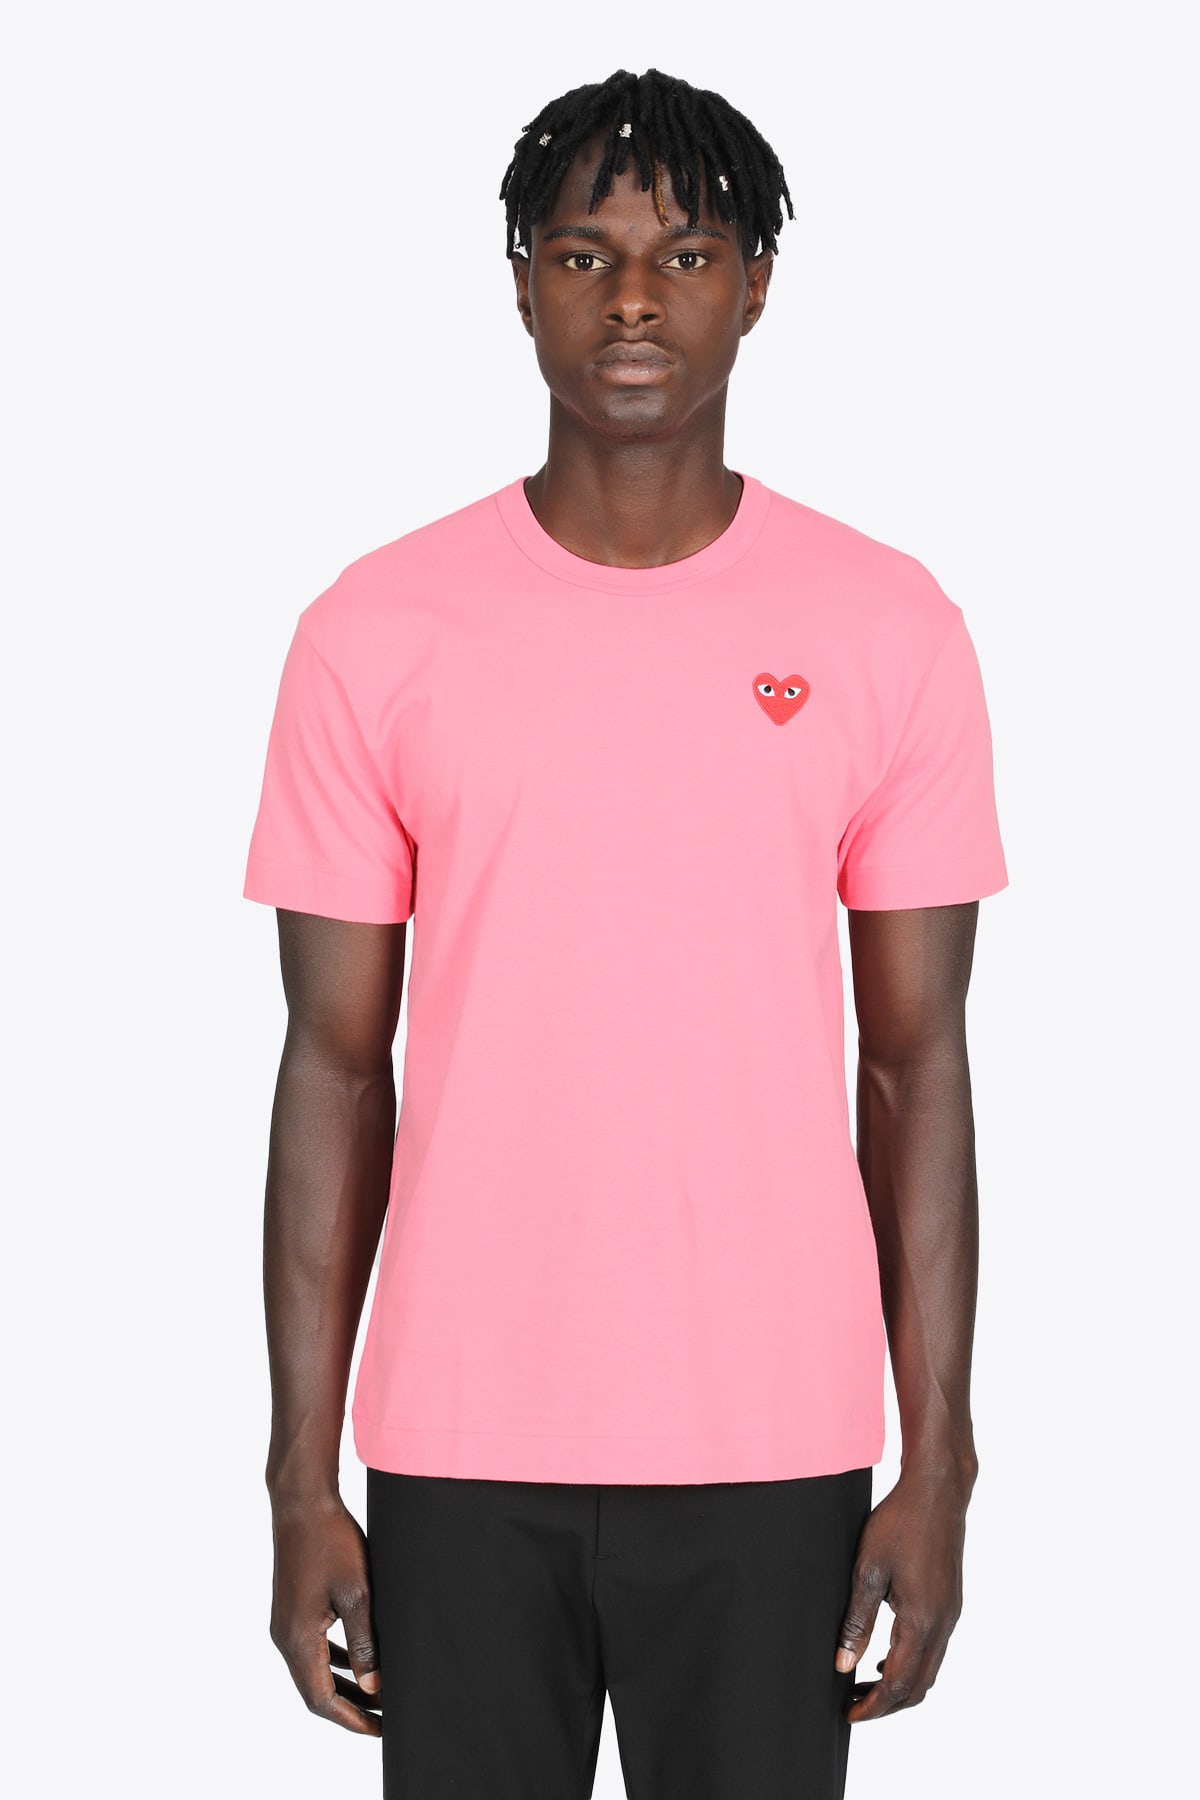 Comme des Garçons Play Heart Patch T-shirt Pink cotton t-shirt with big heart patch